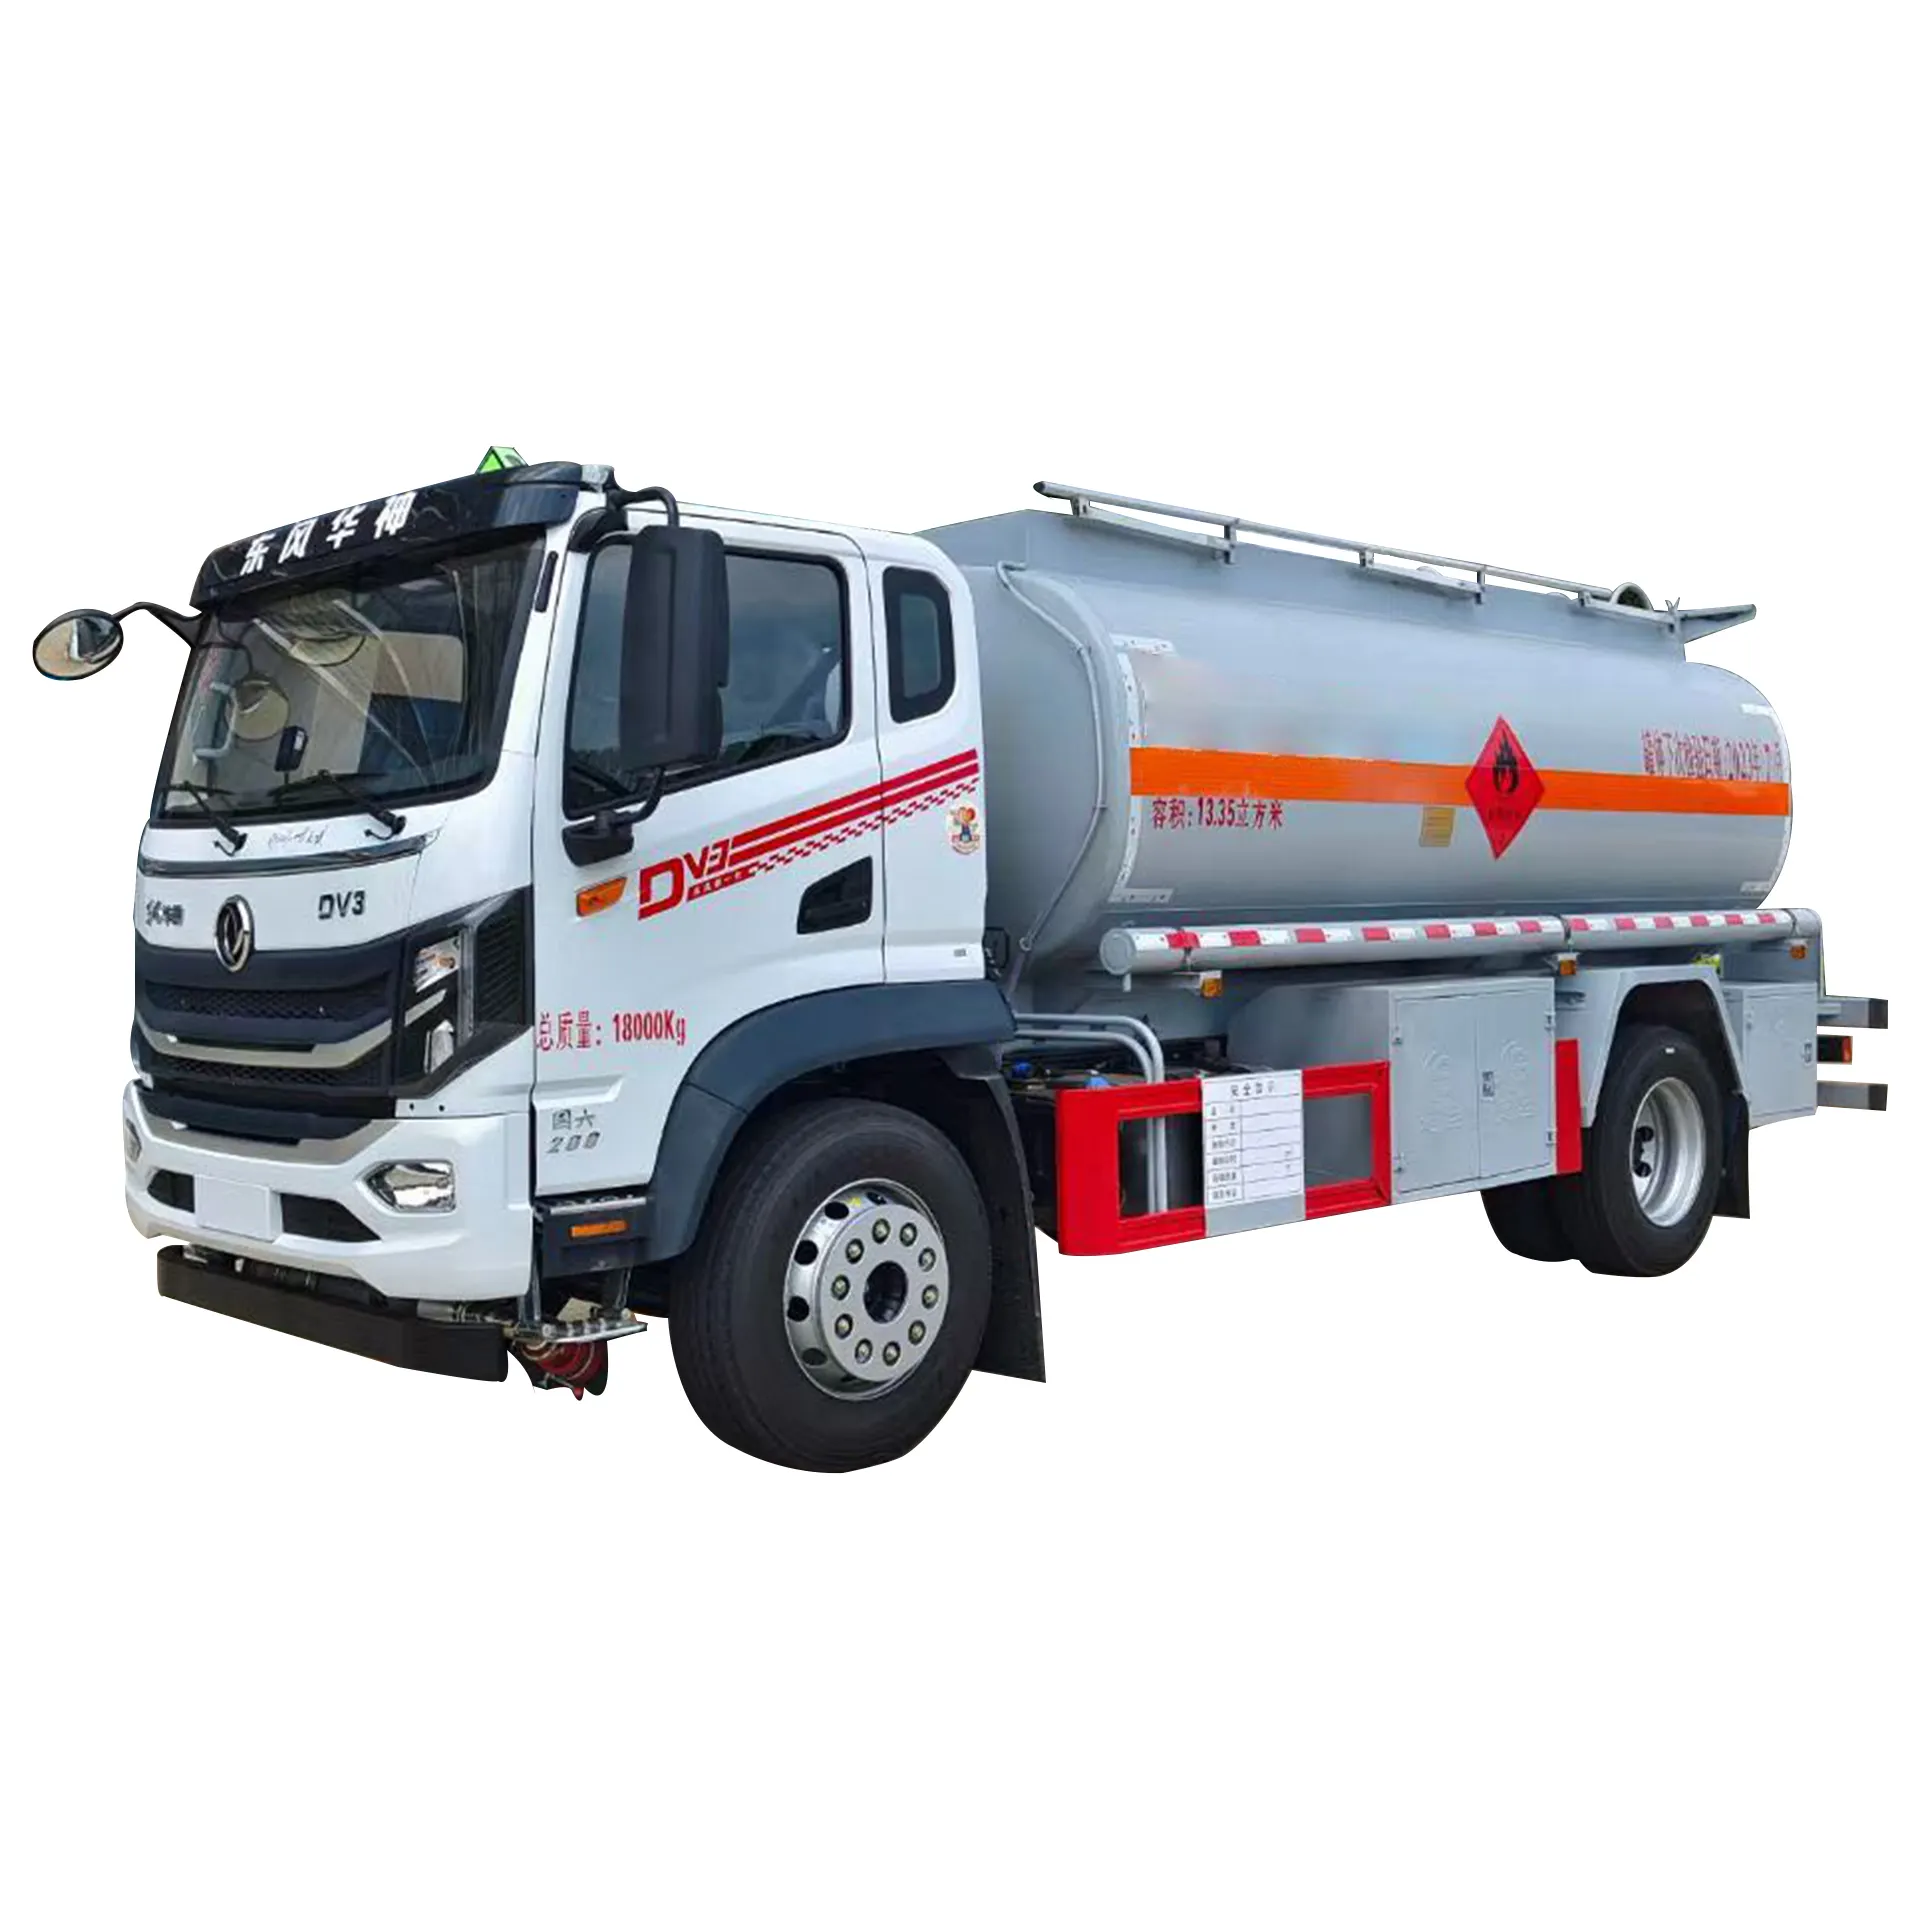 Dongfeng באיכות גבוהה דלק מכלית 10000 ליטר שמן דלק מכלית משאית 4x2 מכלית משאית דיזל למכירה